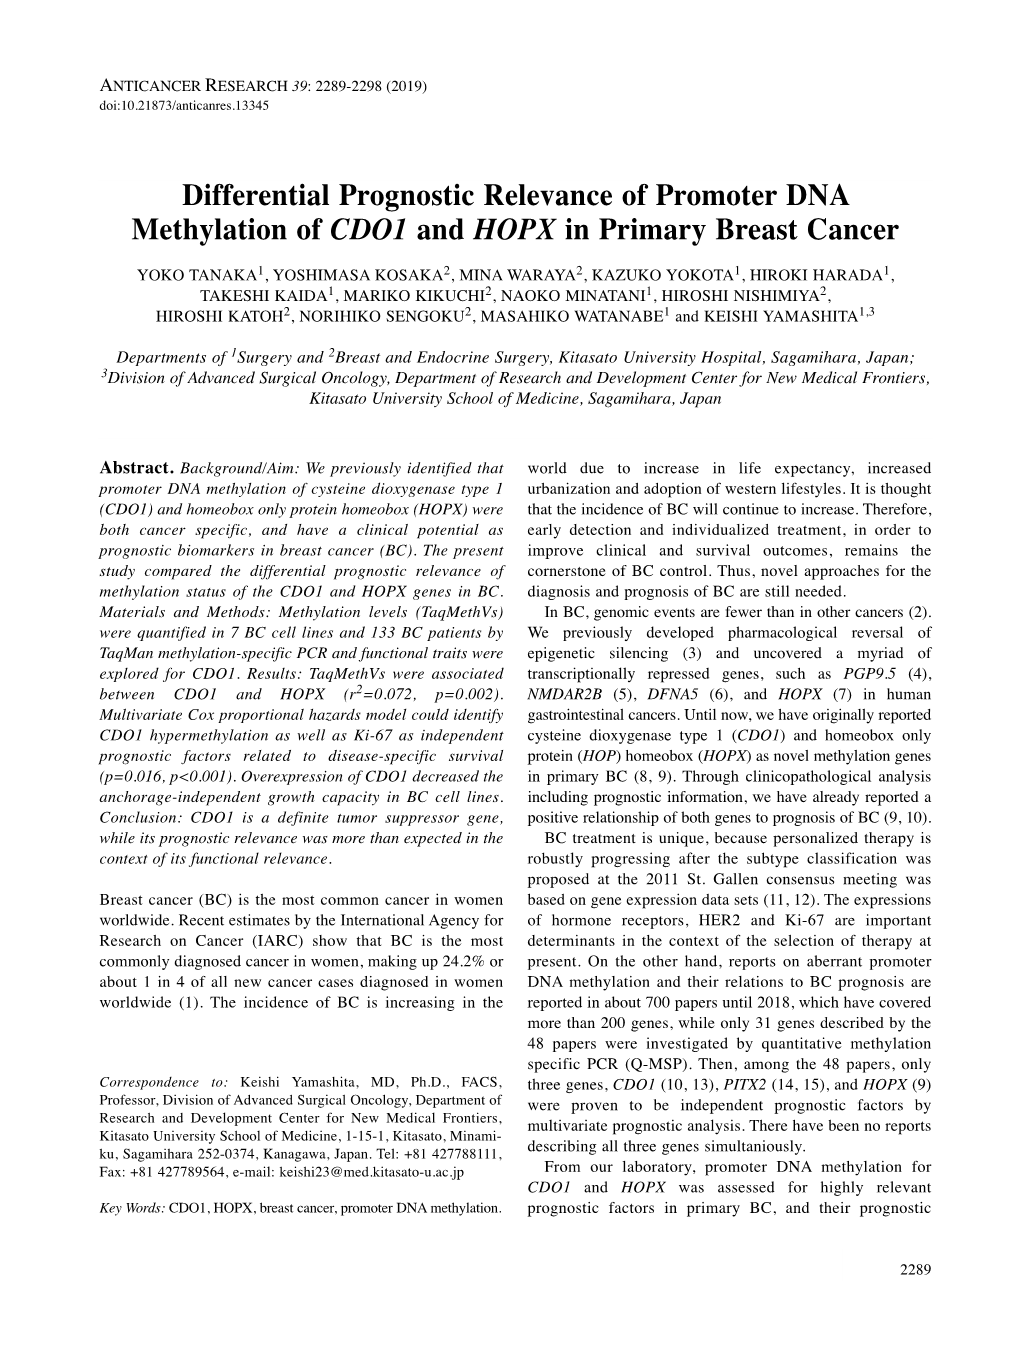 Differential Prognostic Relevance of Promoter DNA Methylation of CDO1